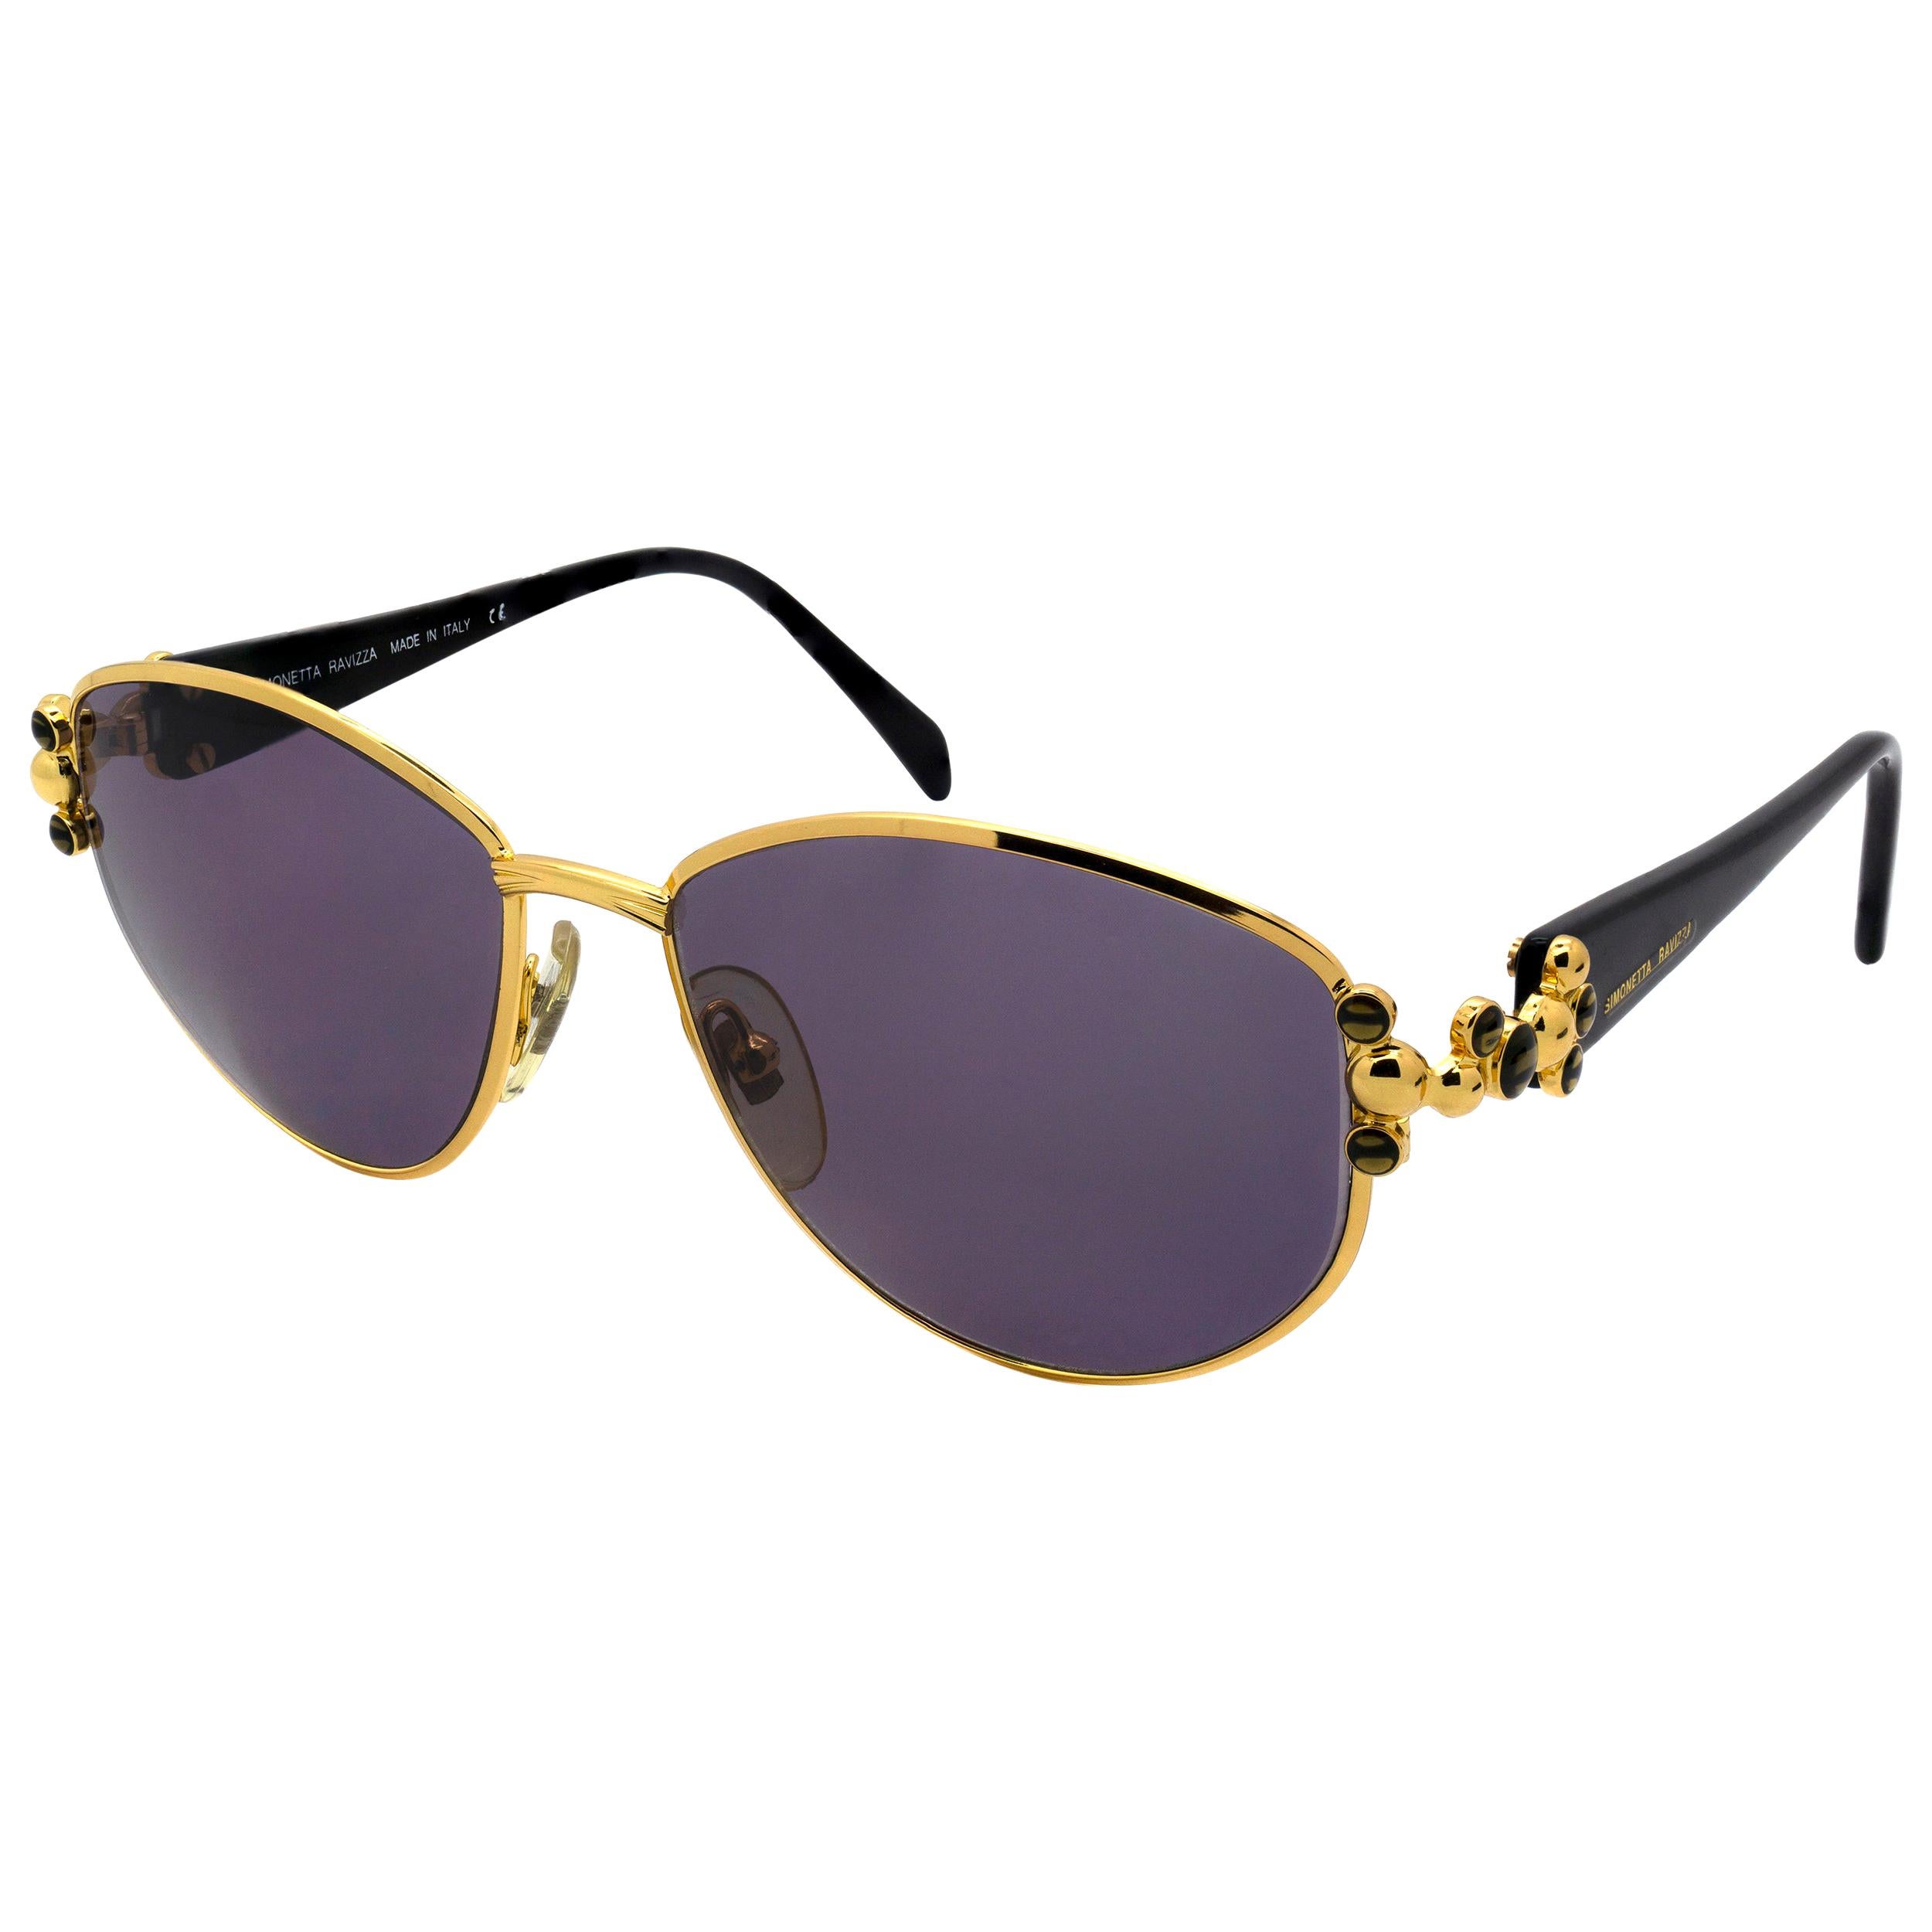 Simonetta Ravizza vintage sunglasses for women 1980s For Sale